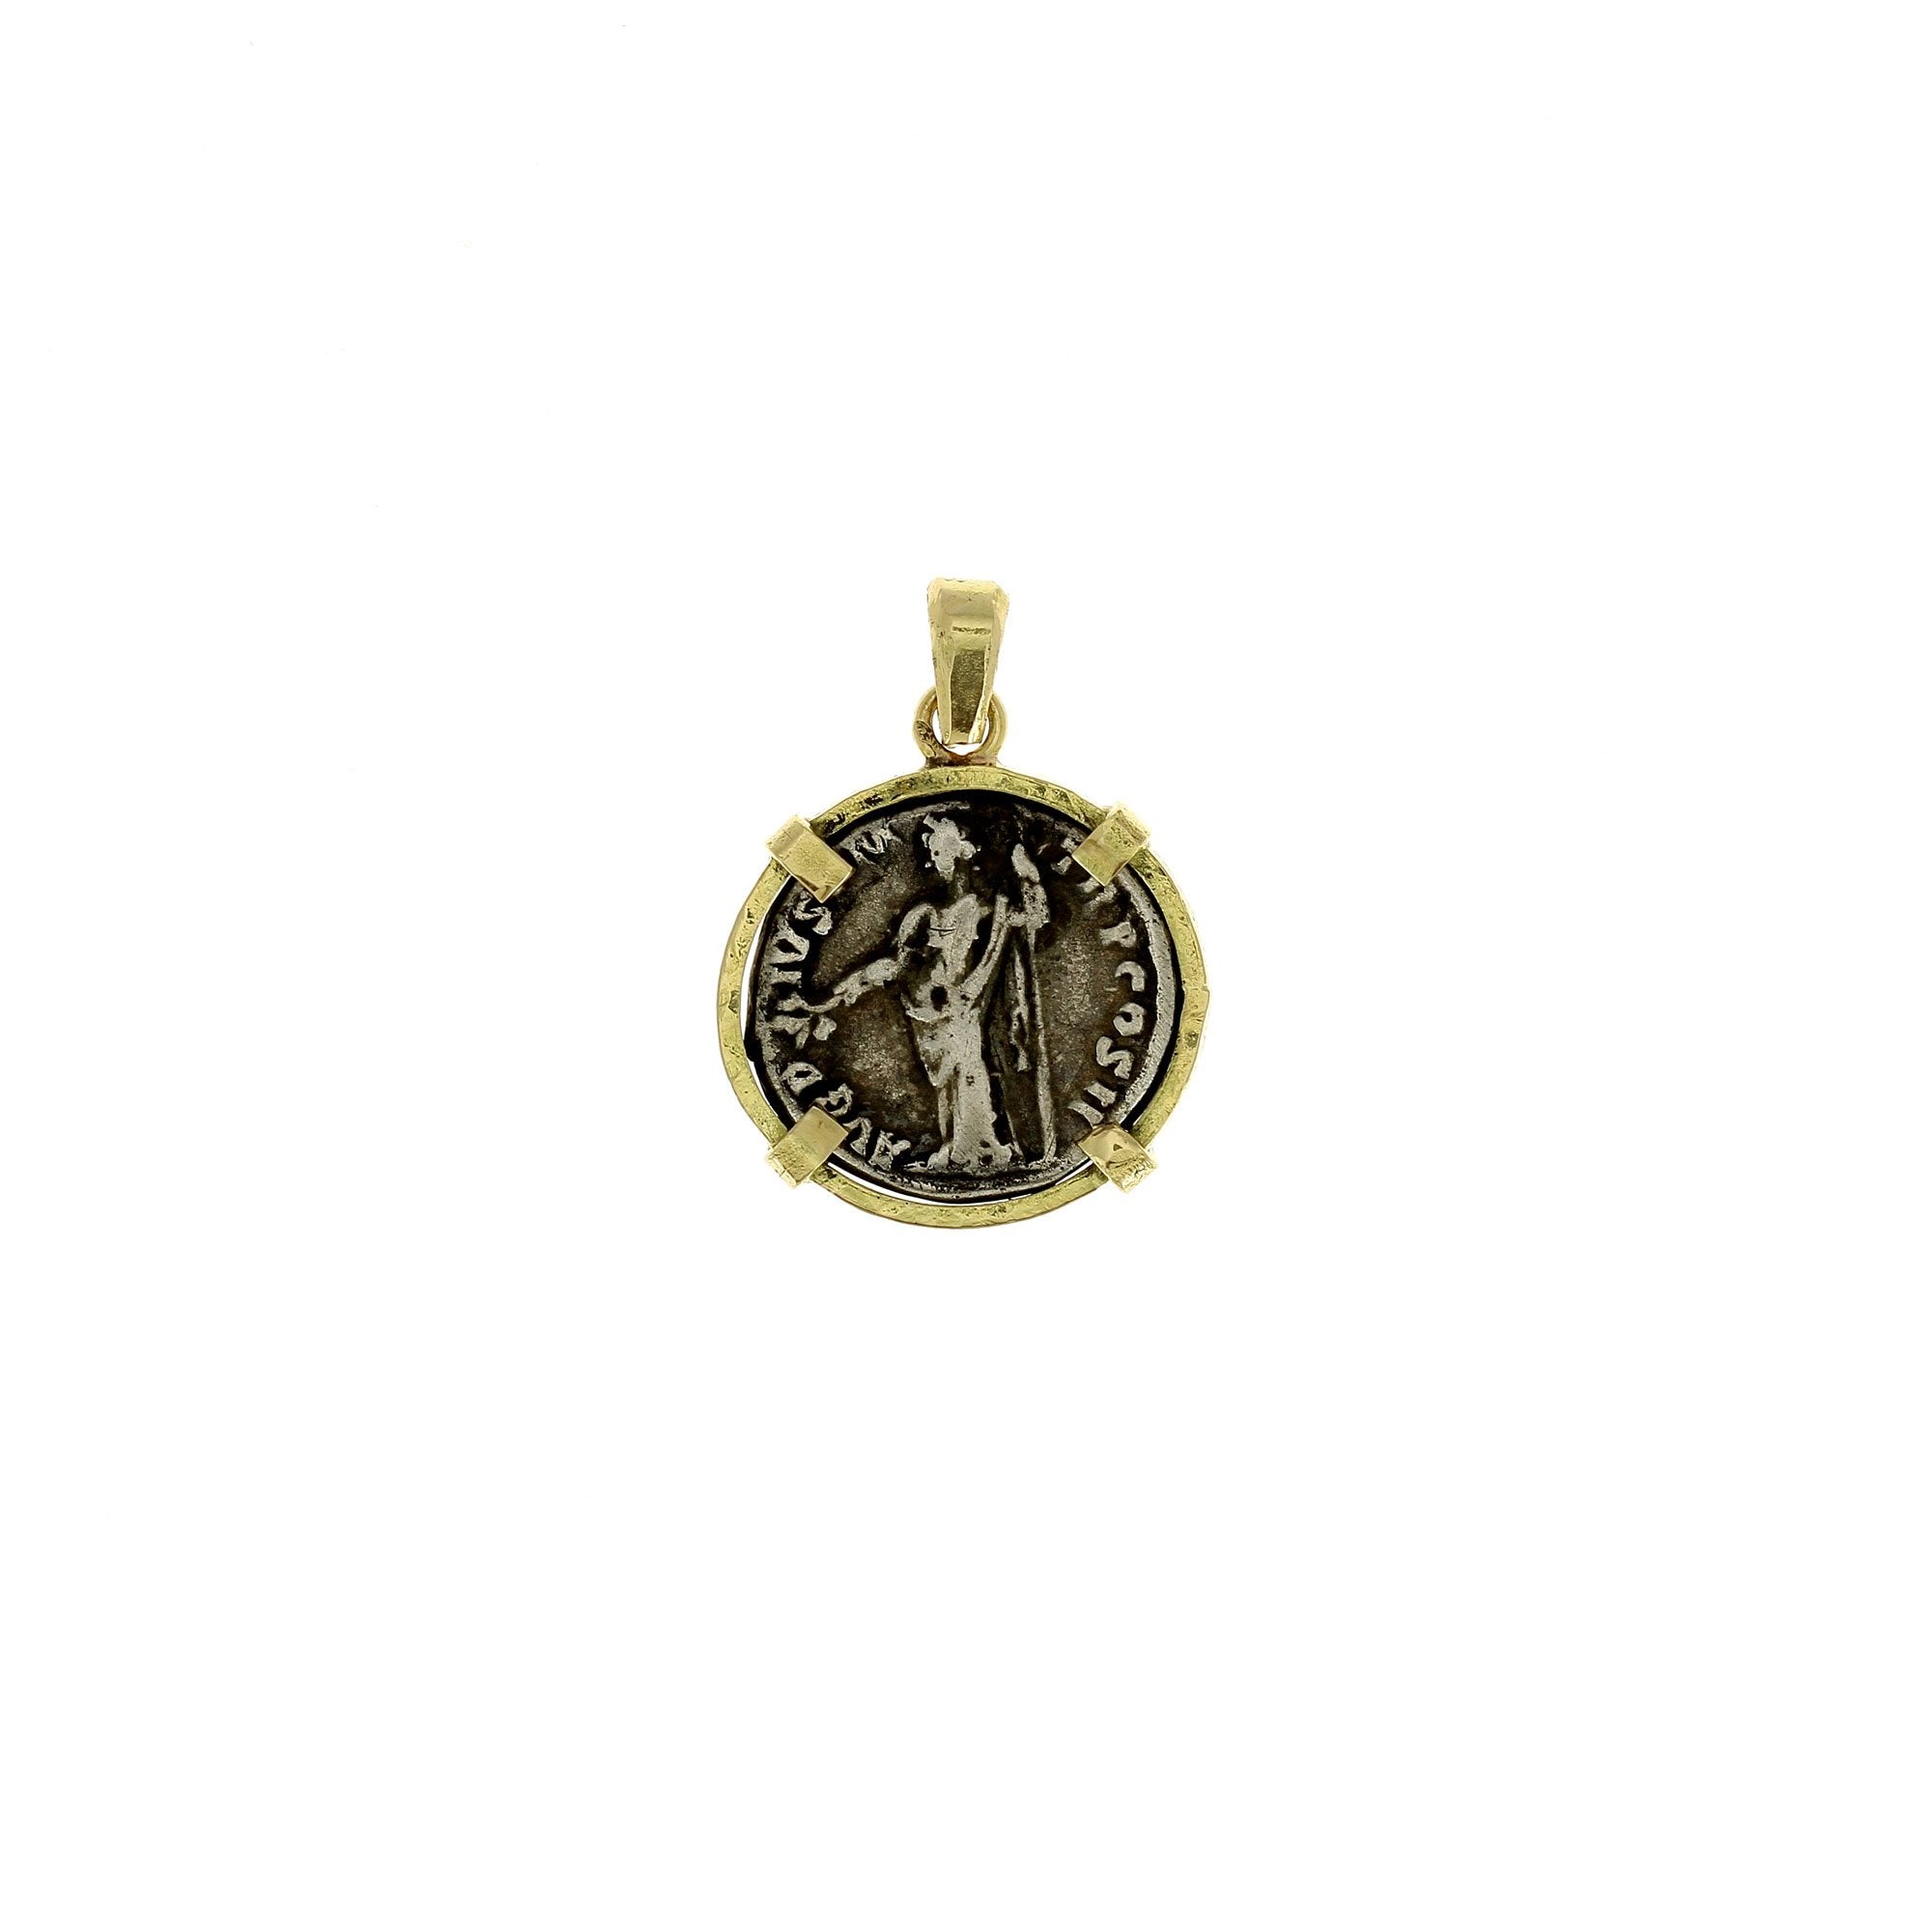 Ravenna Medal